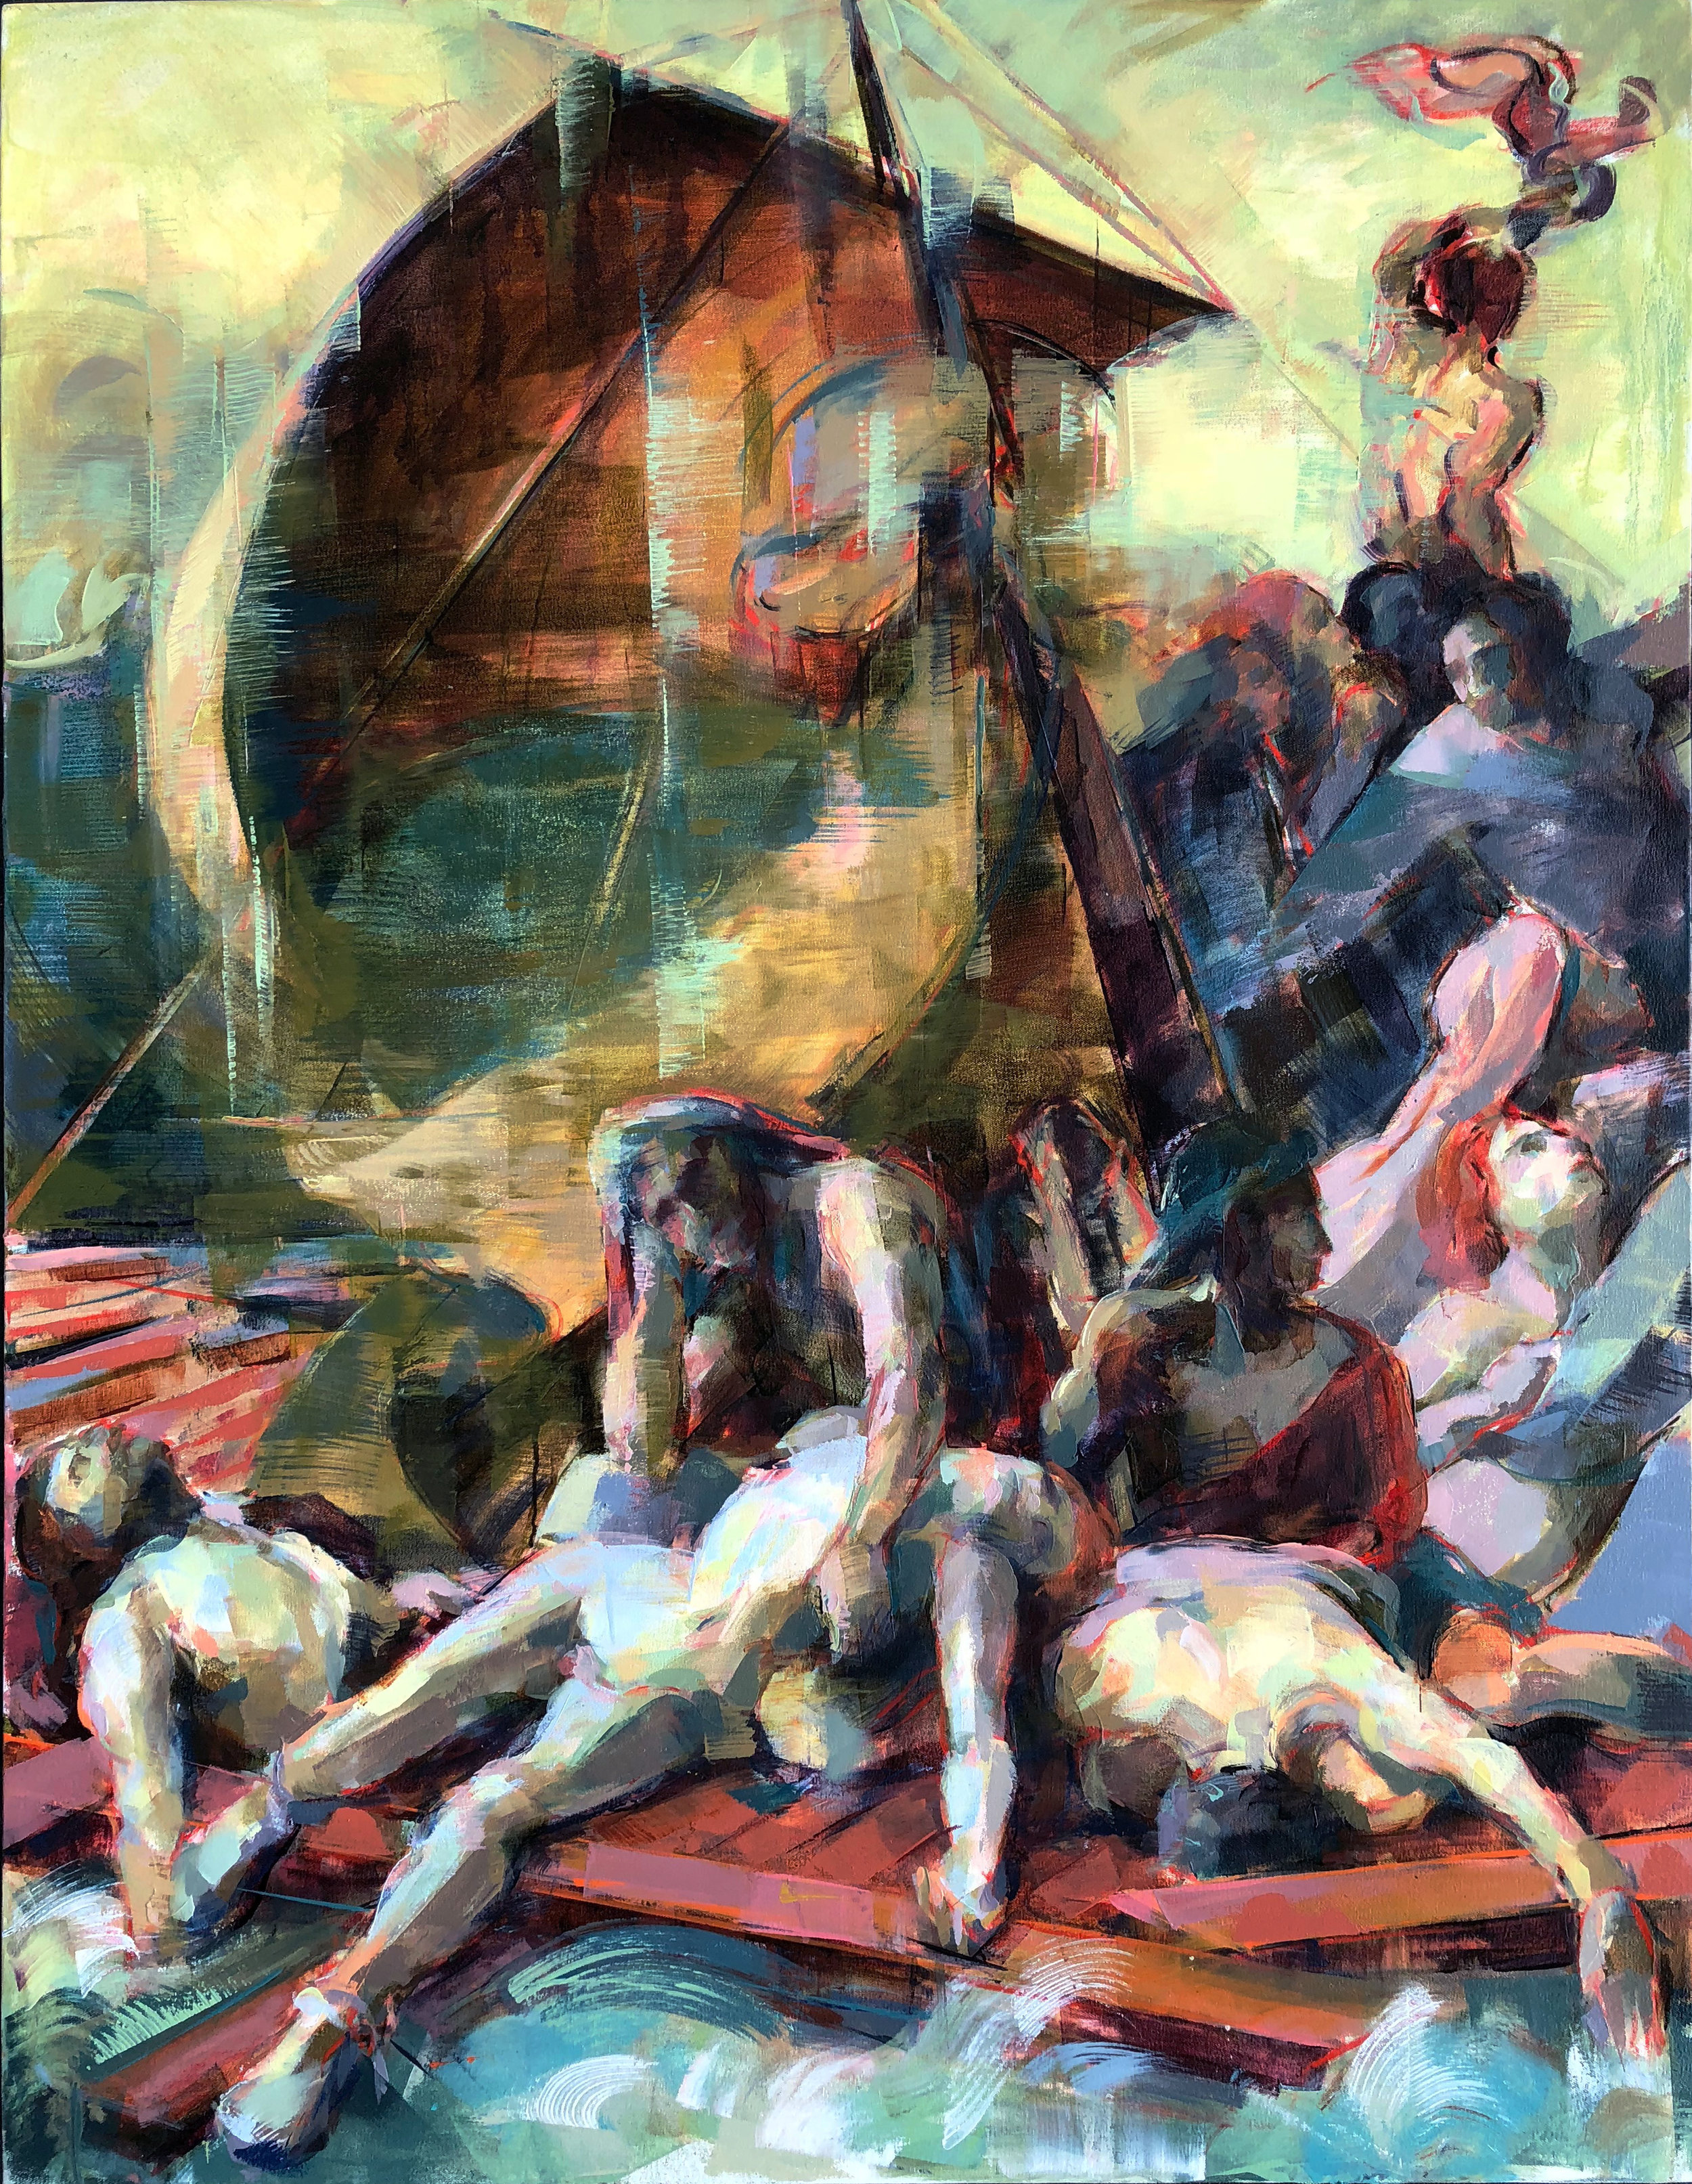   Raft of the Medusa  2018 Oil on canvas 53" x 41" 